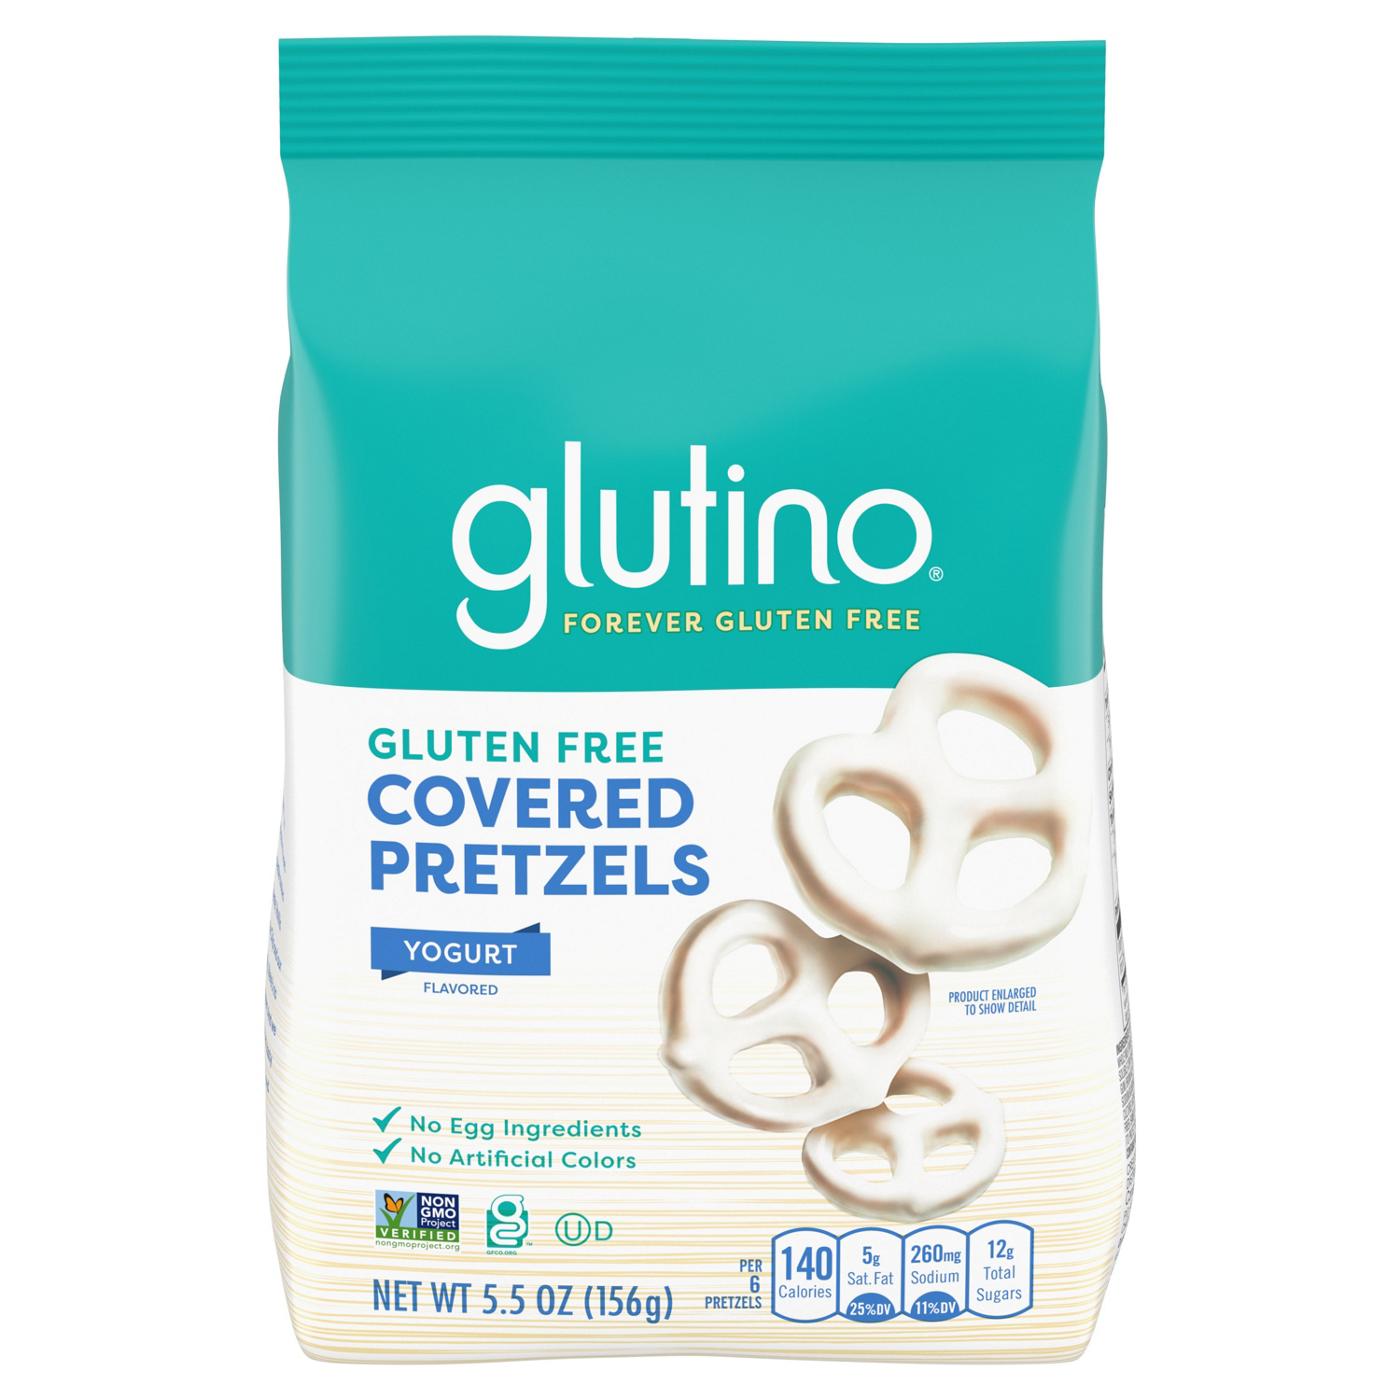 Glutino Gluten Free Yogurt Flavored Covered Pretzels; image 1 of 4